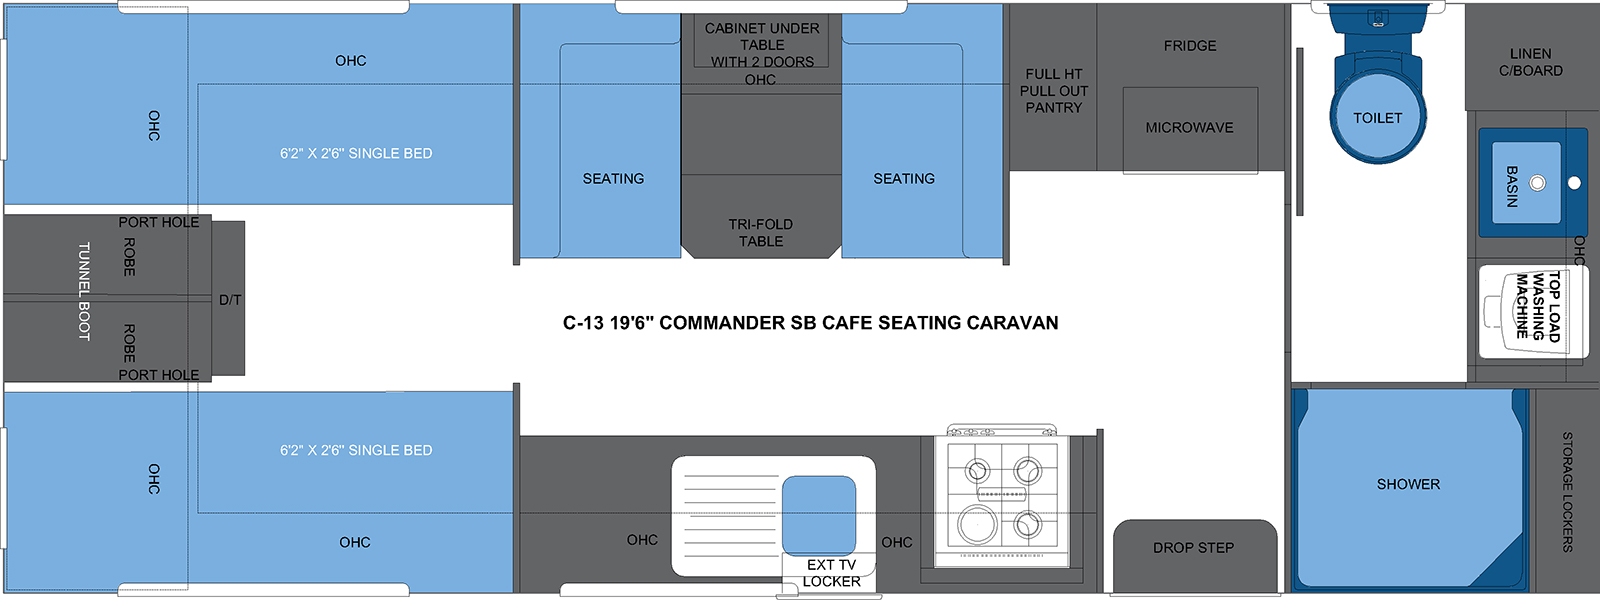 C-13 19'6 COMMANDER SB CAFE SEATING CARAVAN